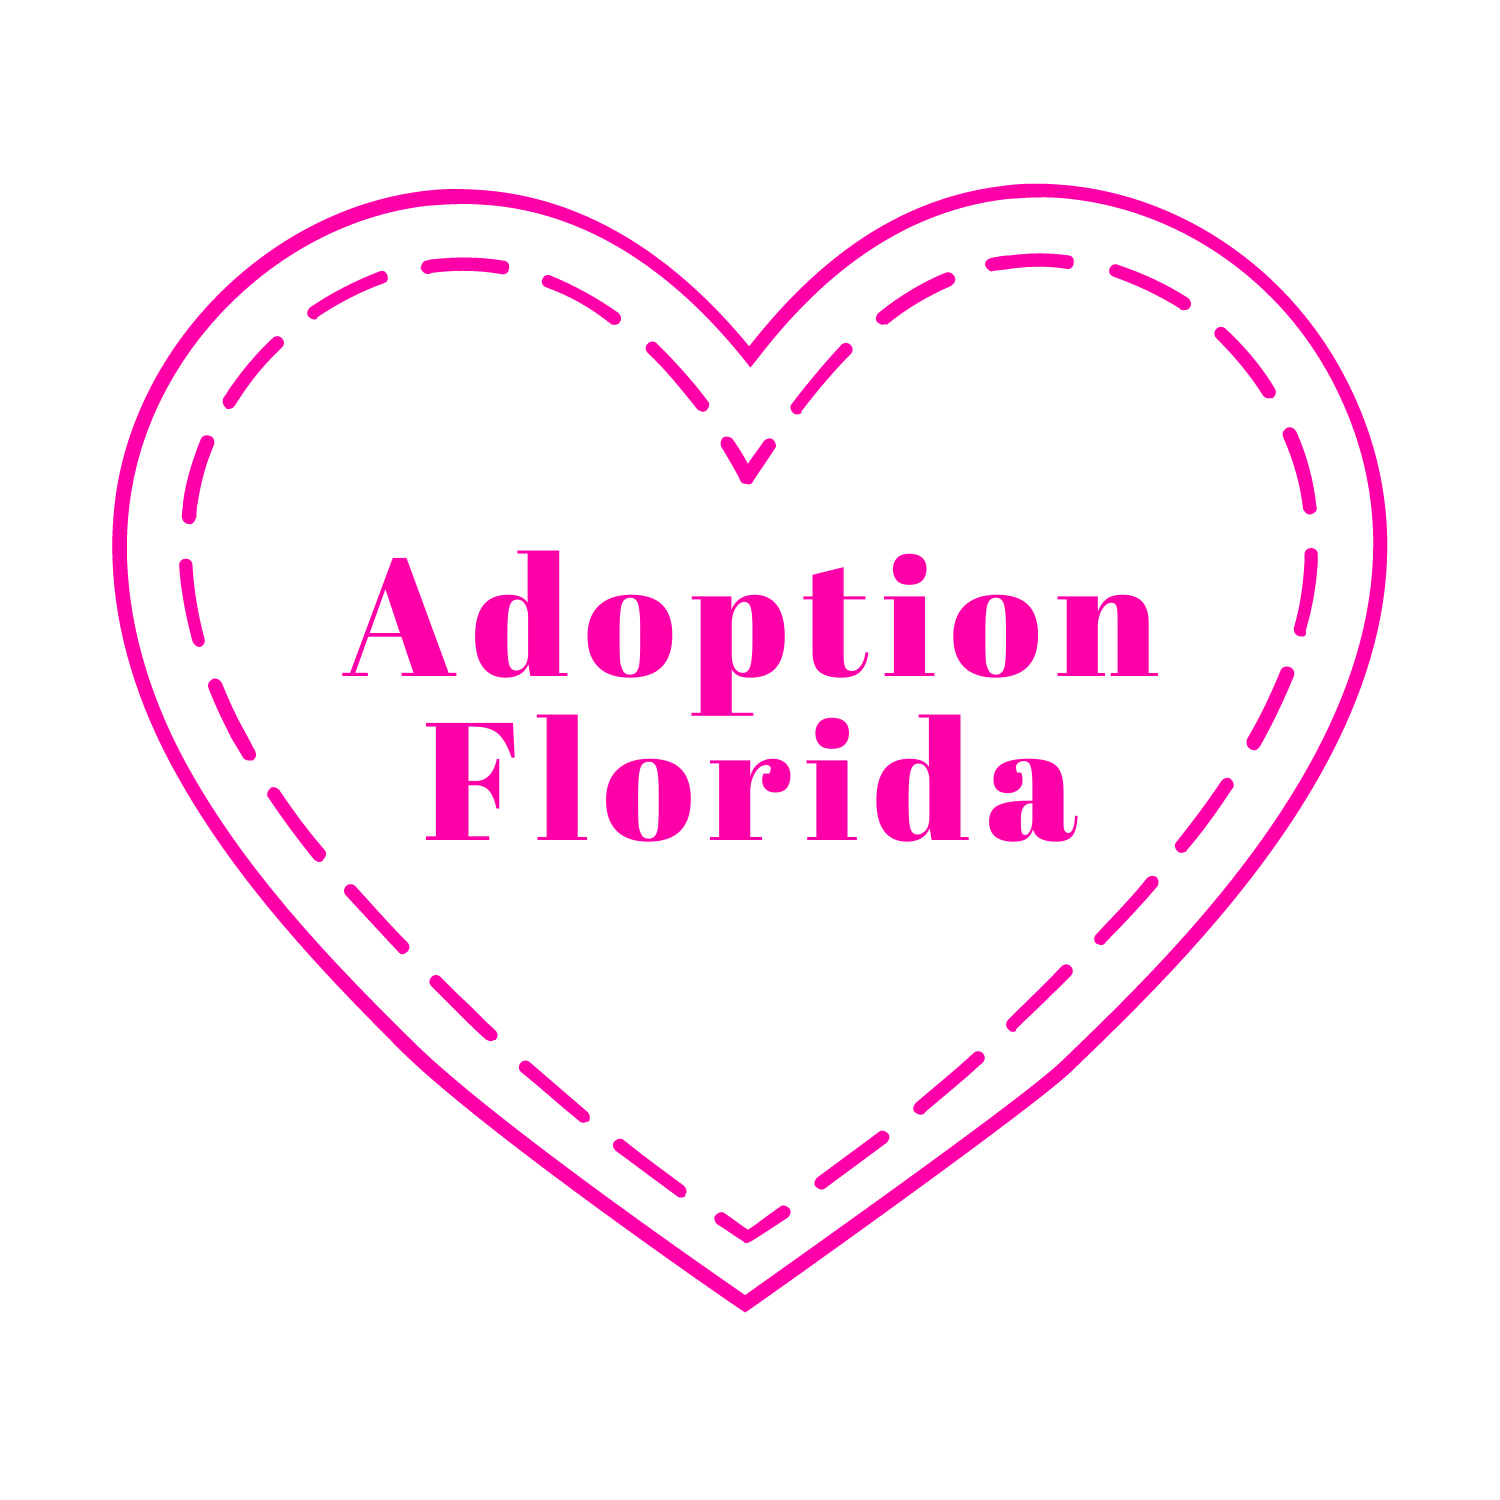 Florida Adoption Law Group